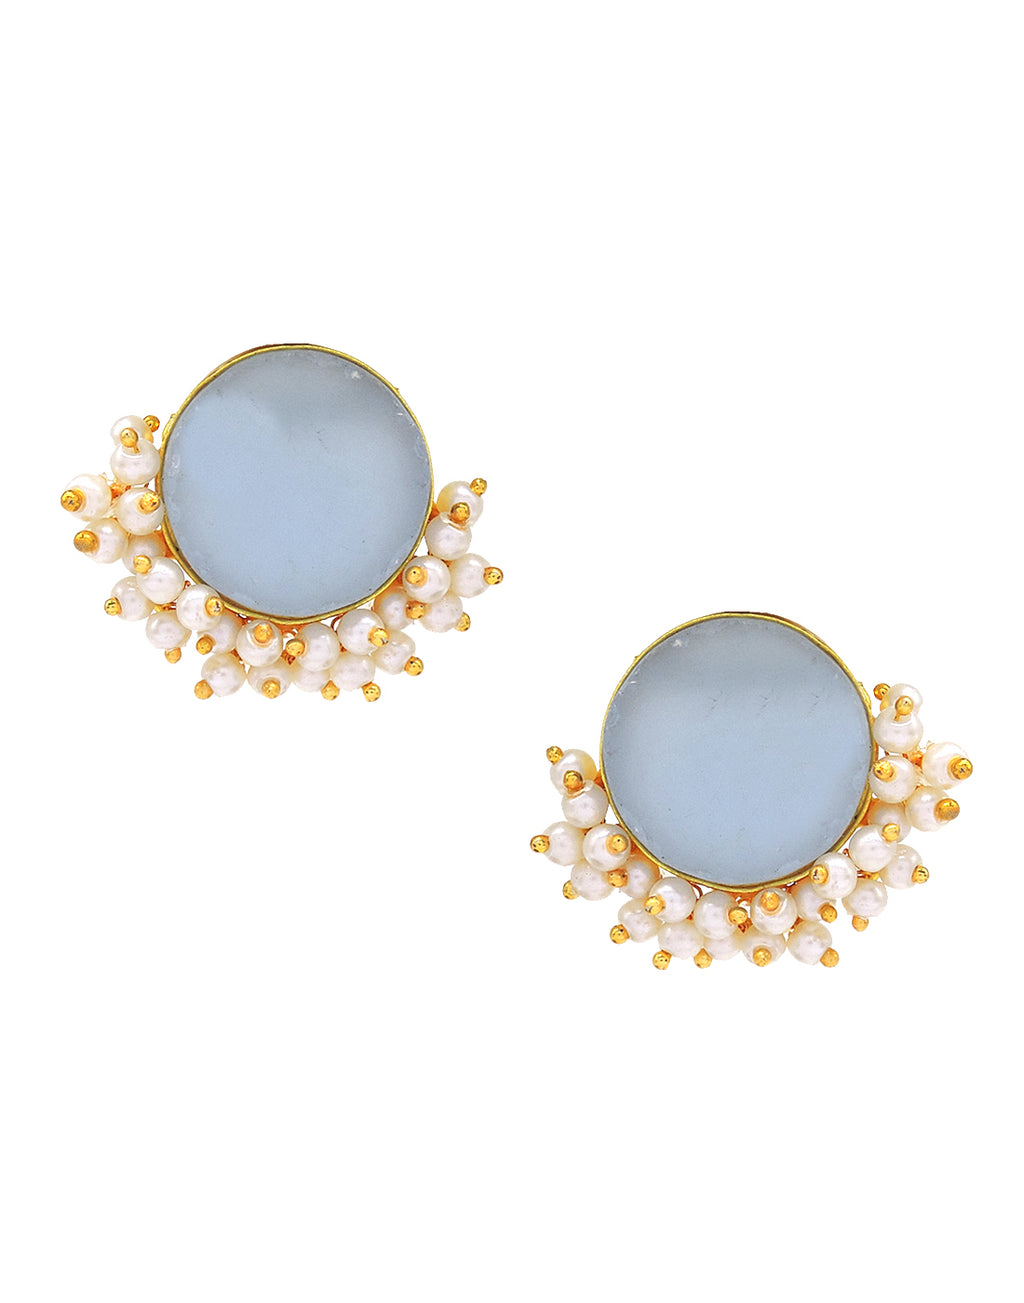 Crown Earrings (Blue Onyx) - Statement Earrings - Gold-Plated & Hypoallergenic Jewellery - Made in India - Dubai Jewellery - Dori